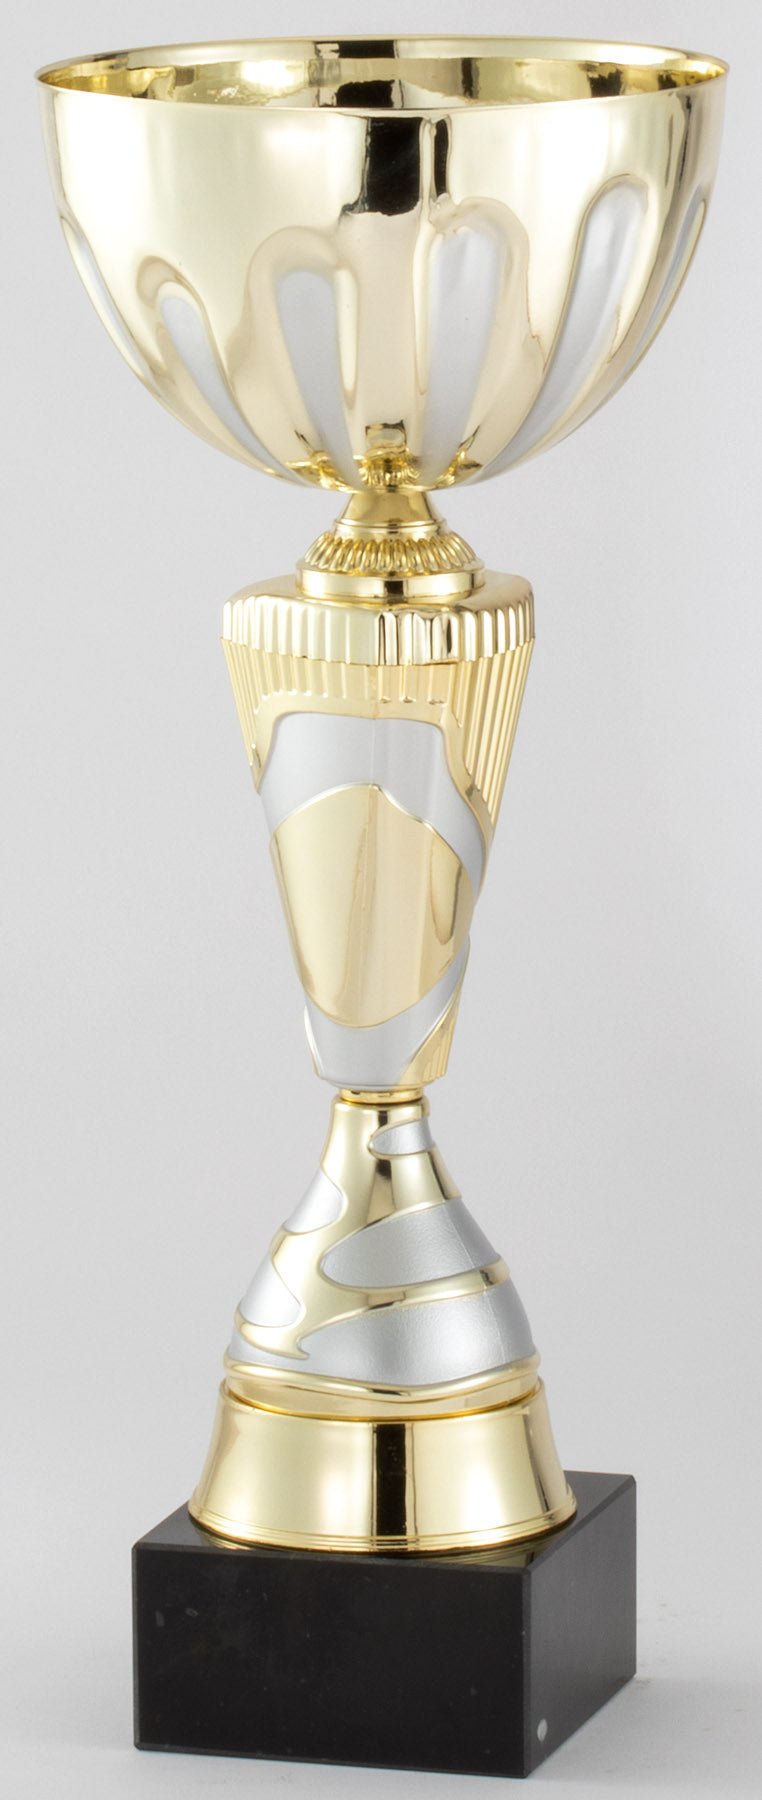 AMC356 Series Trophy Cup Award - AndersonTrophy.com